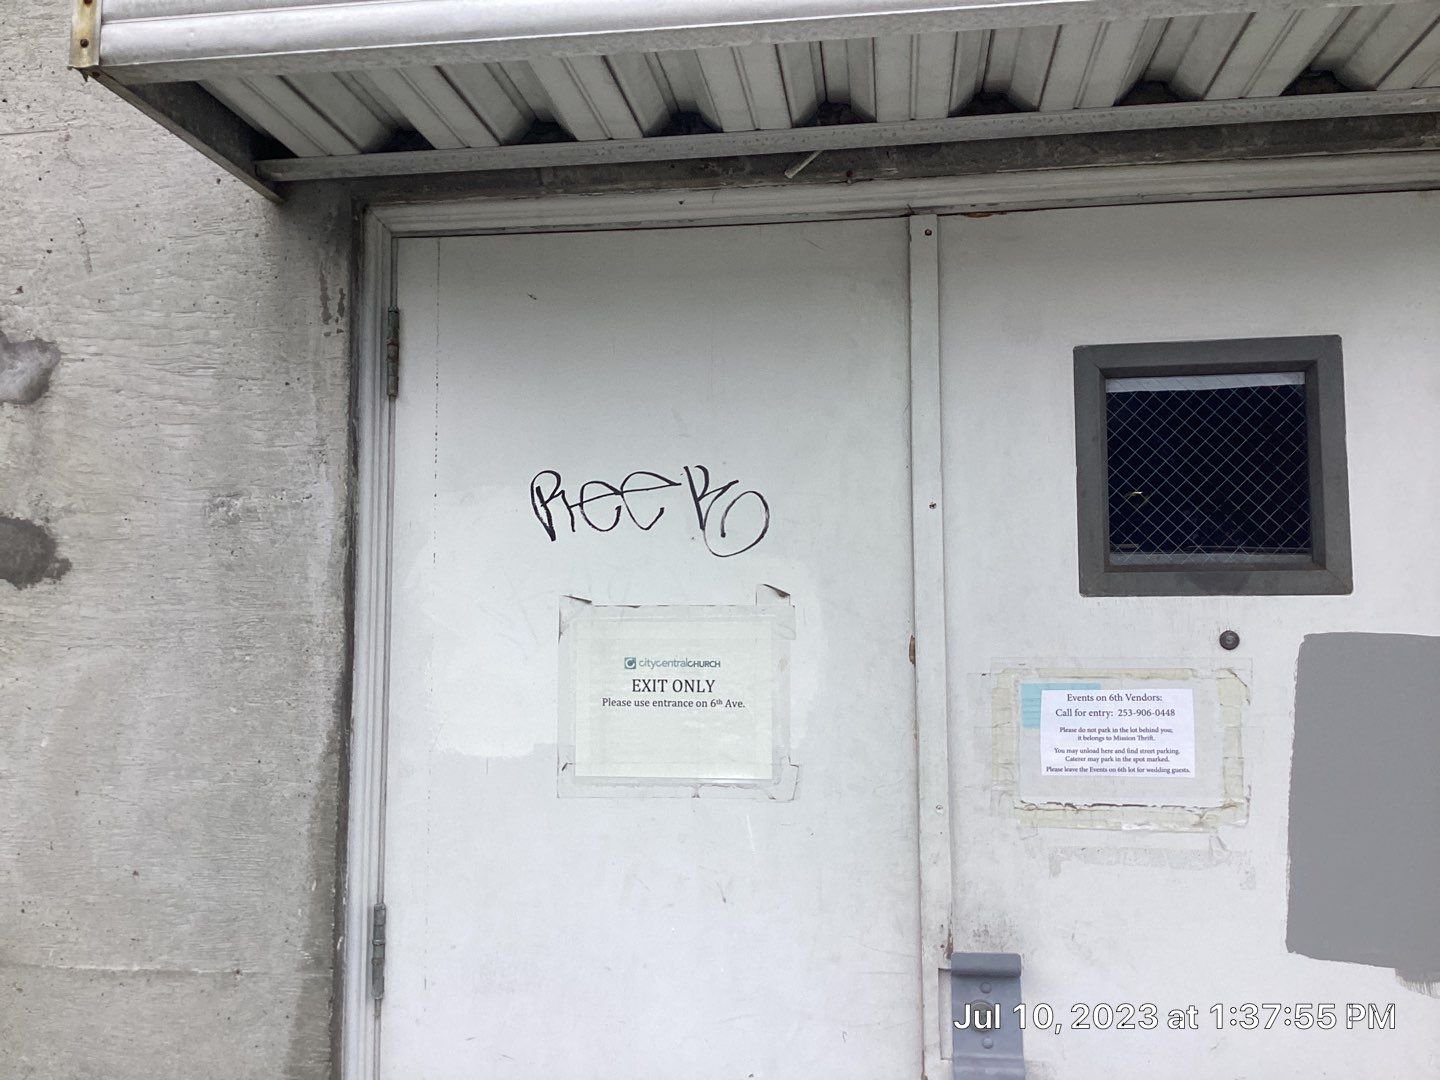 graffiti-removal-service-on-metal-door-Tacoma.jpg